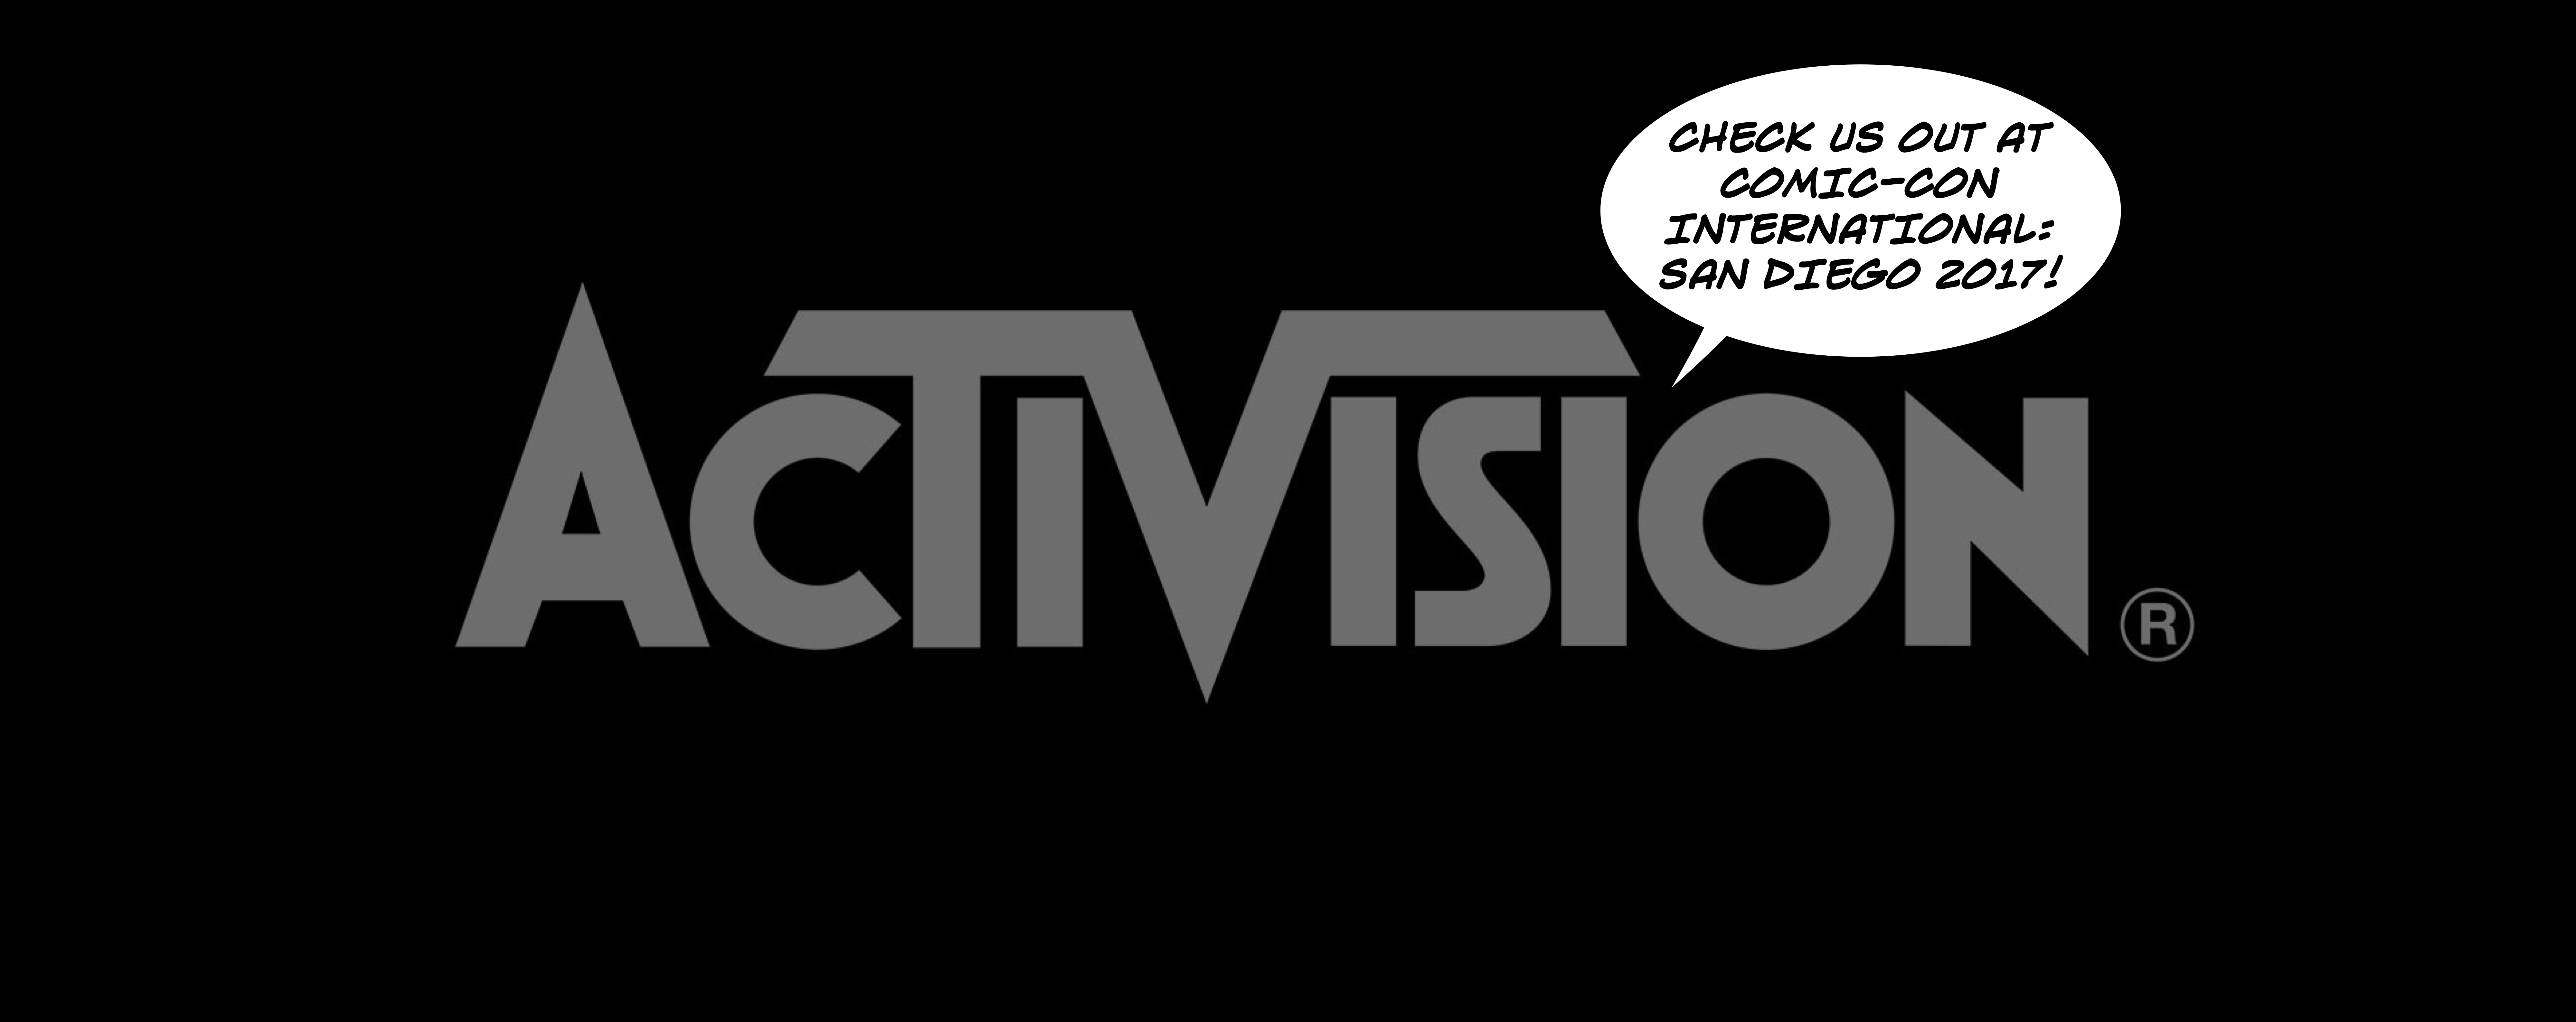 File:Activision Blizzard logo